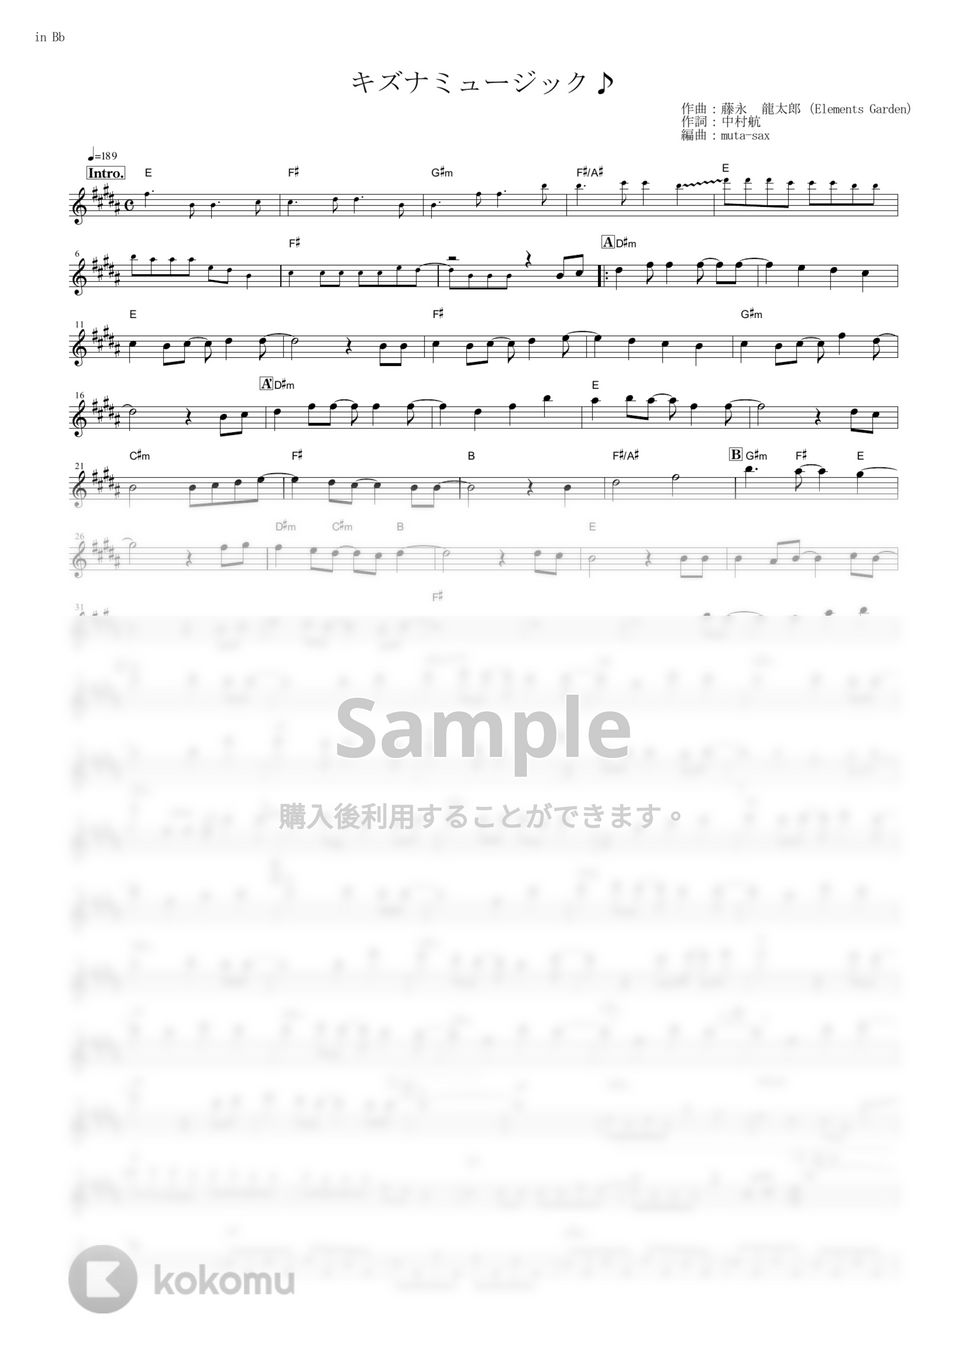 BanG Dream!（バンドリ！）第2期 - キズナミュージック♪【in Bb】 by muta-sax